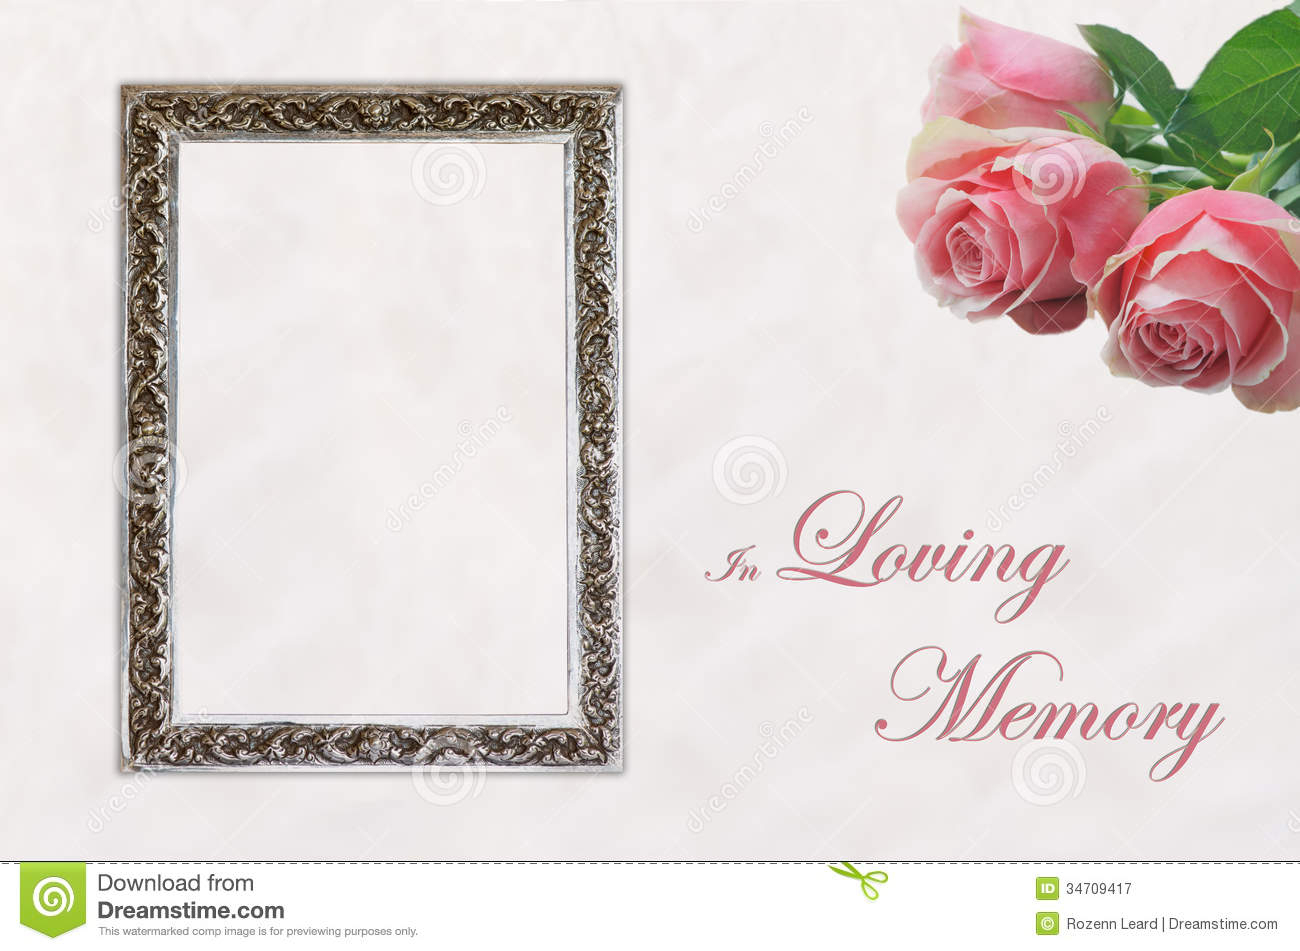 In Memory Cards Templates ] – Memory Template 4 Celebration Regarding Memorial Card Template Word